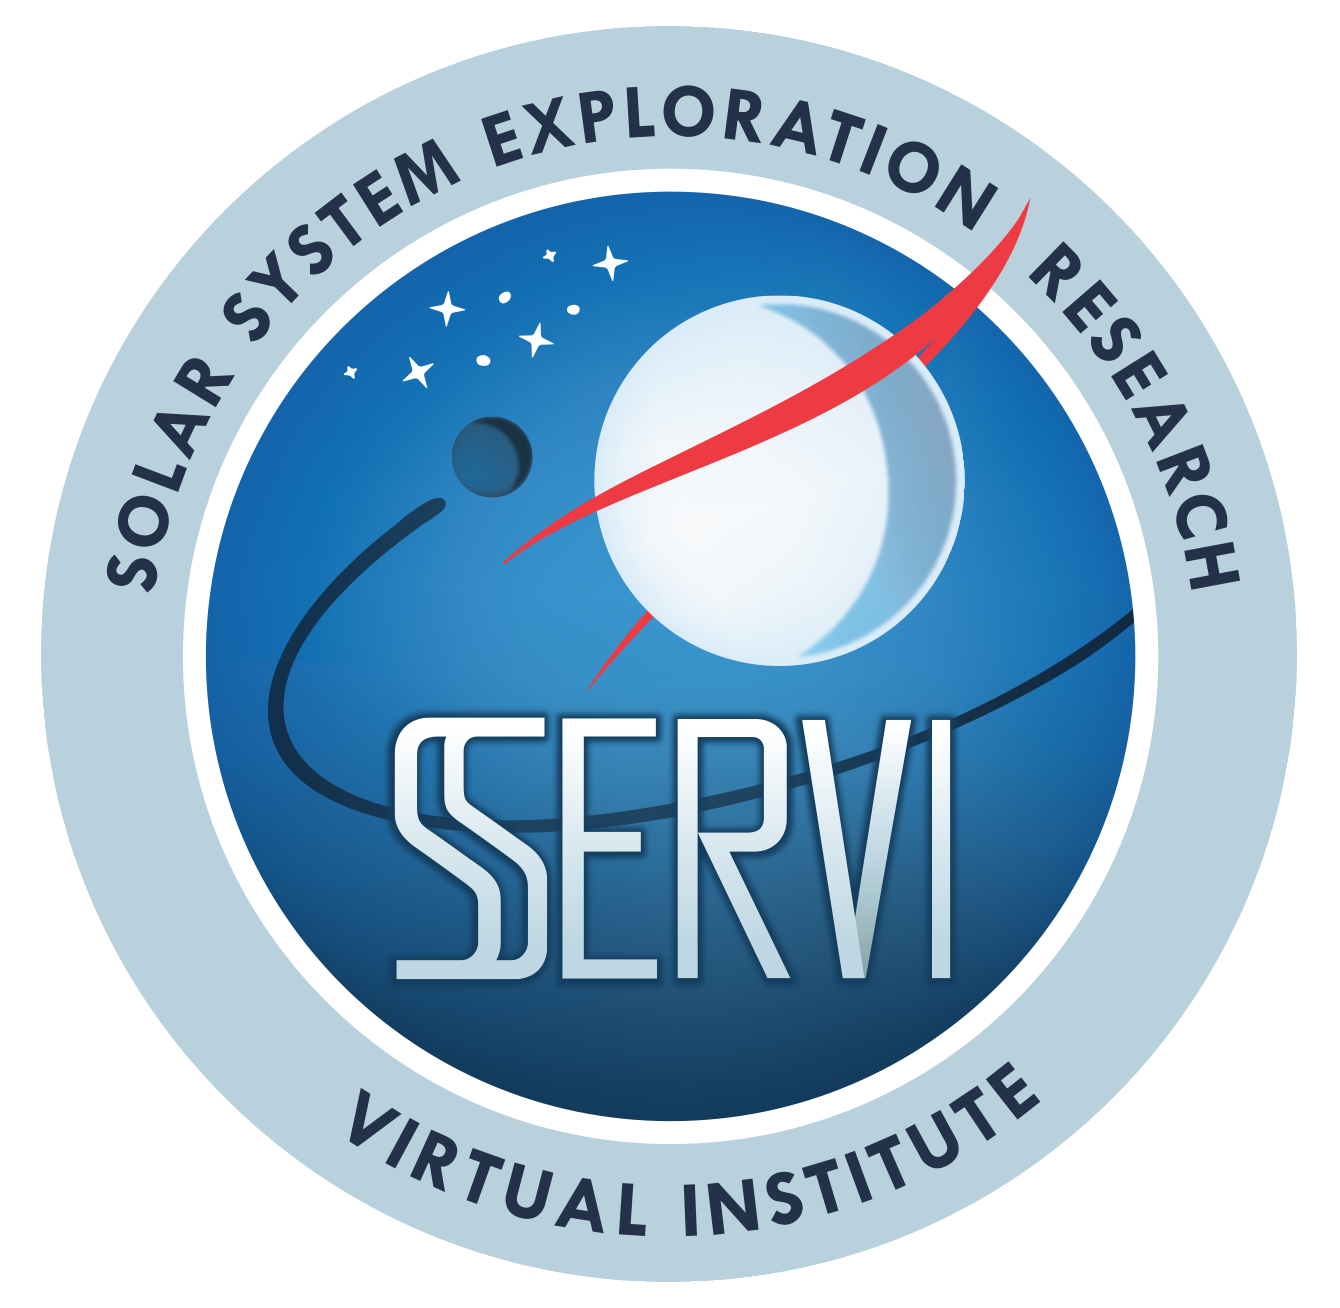 Solar System Exploration Research Virtual Institute logo